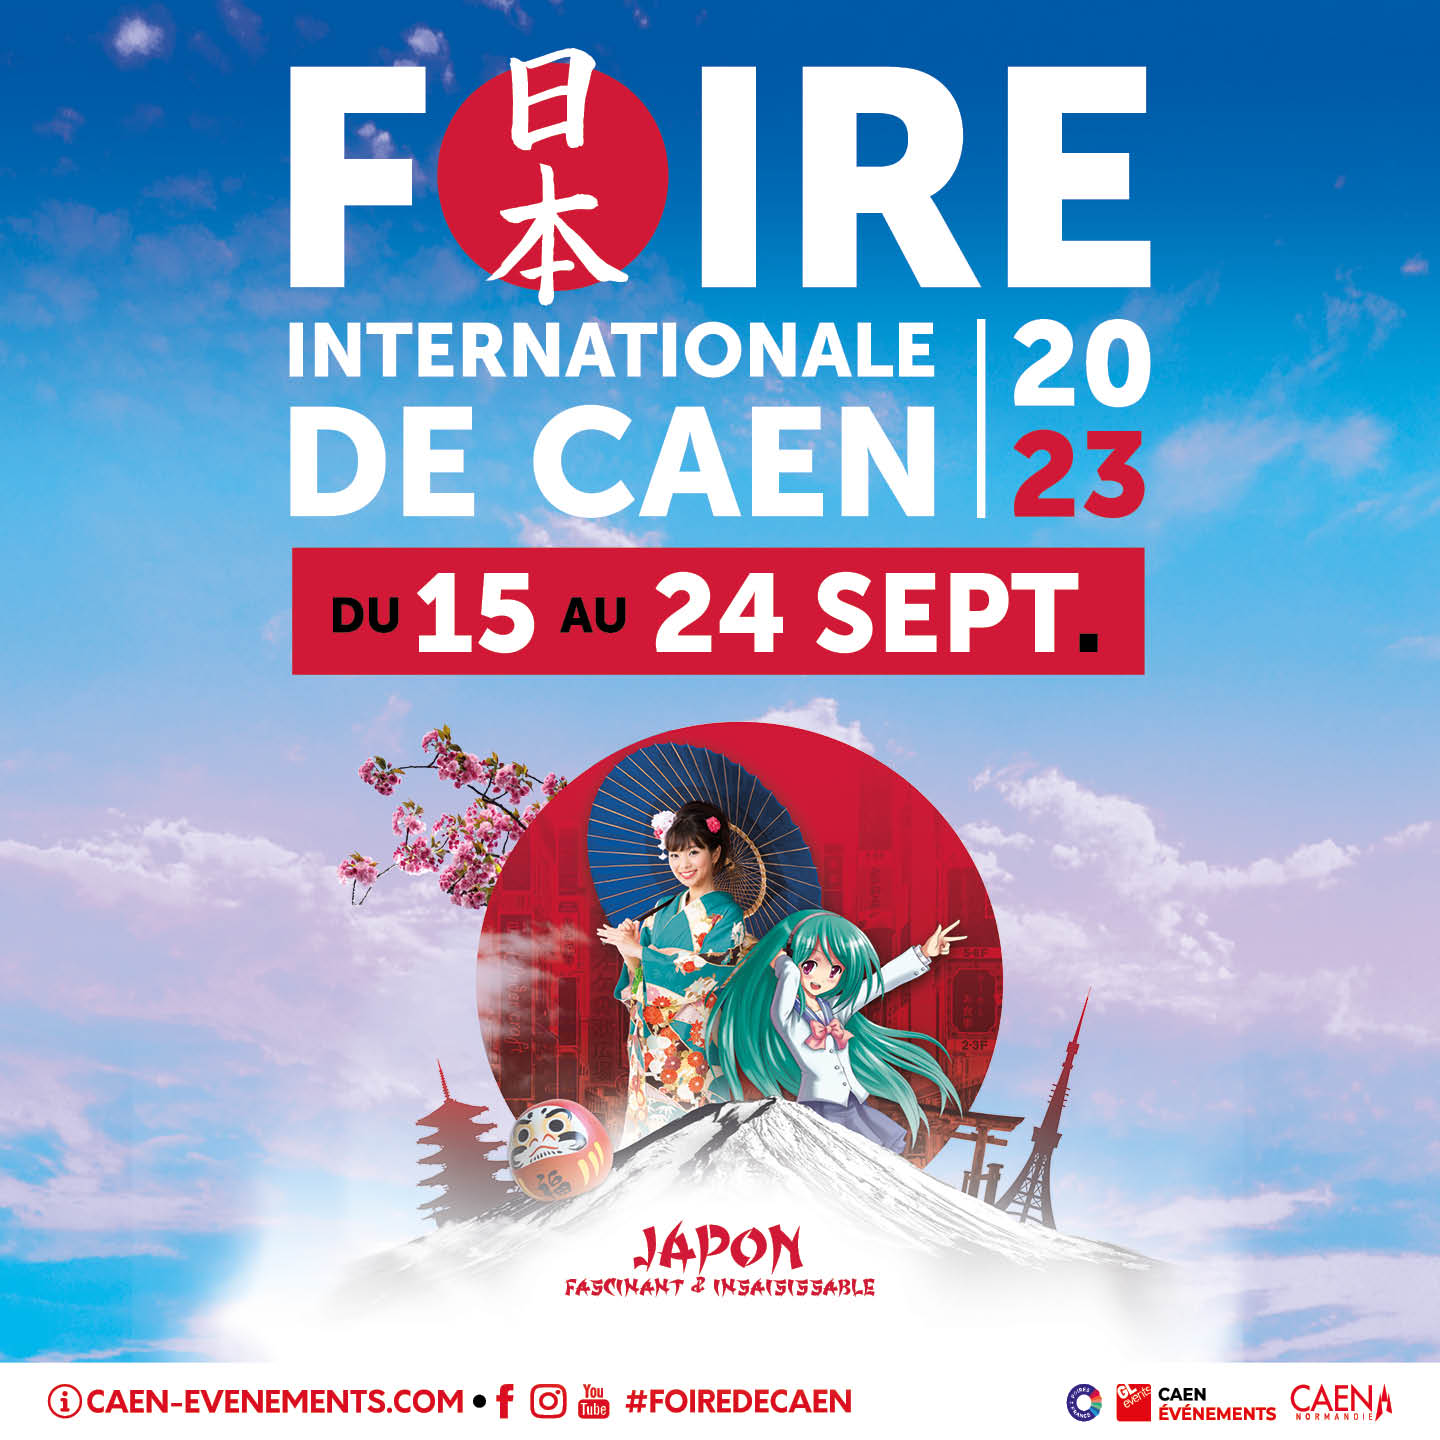 Foire Internationale de Caen